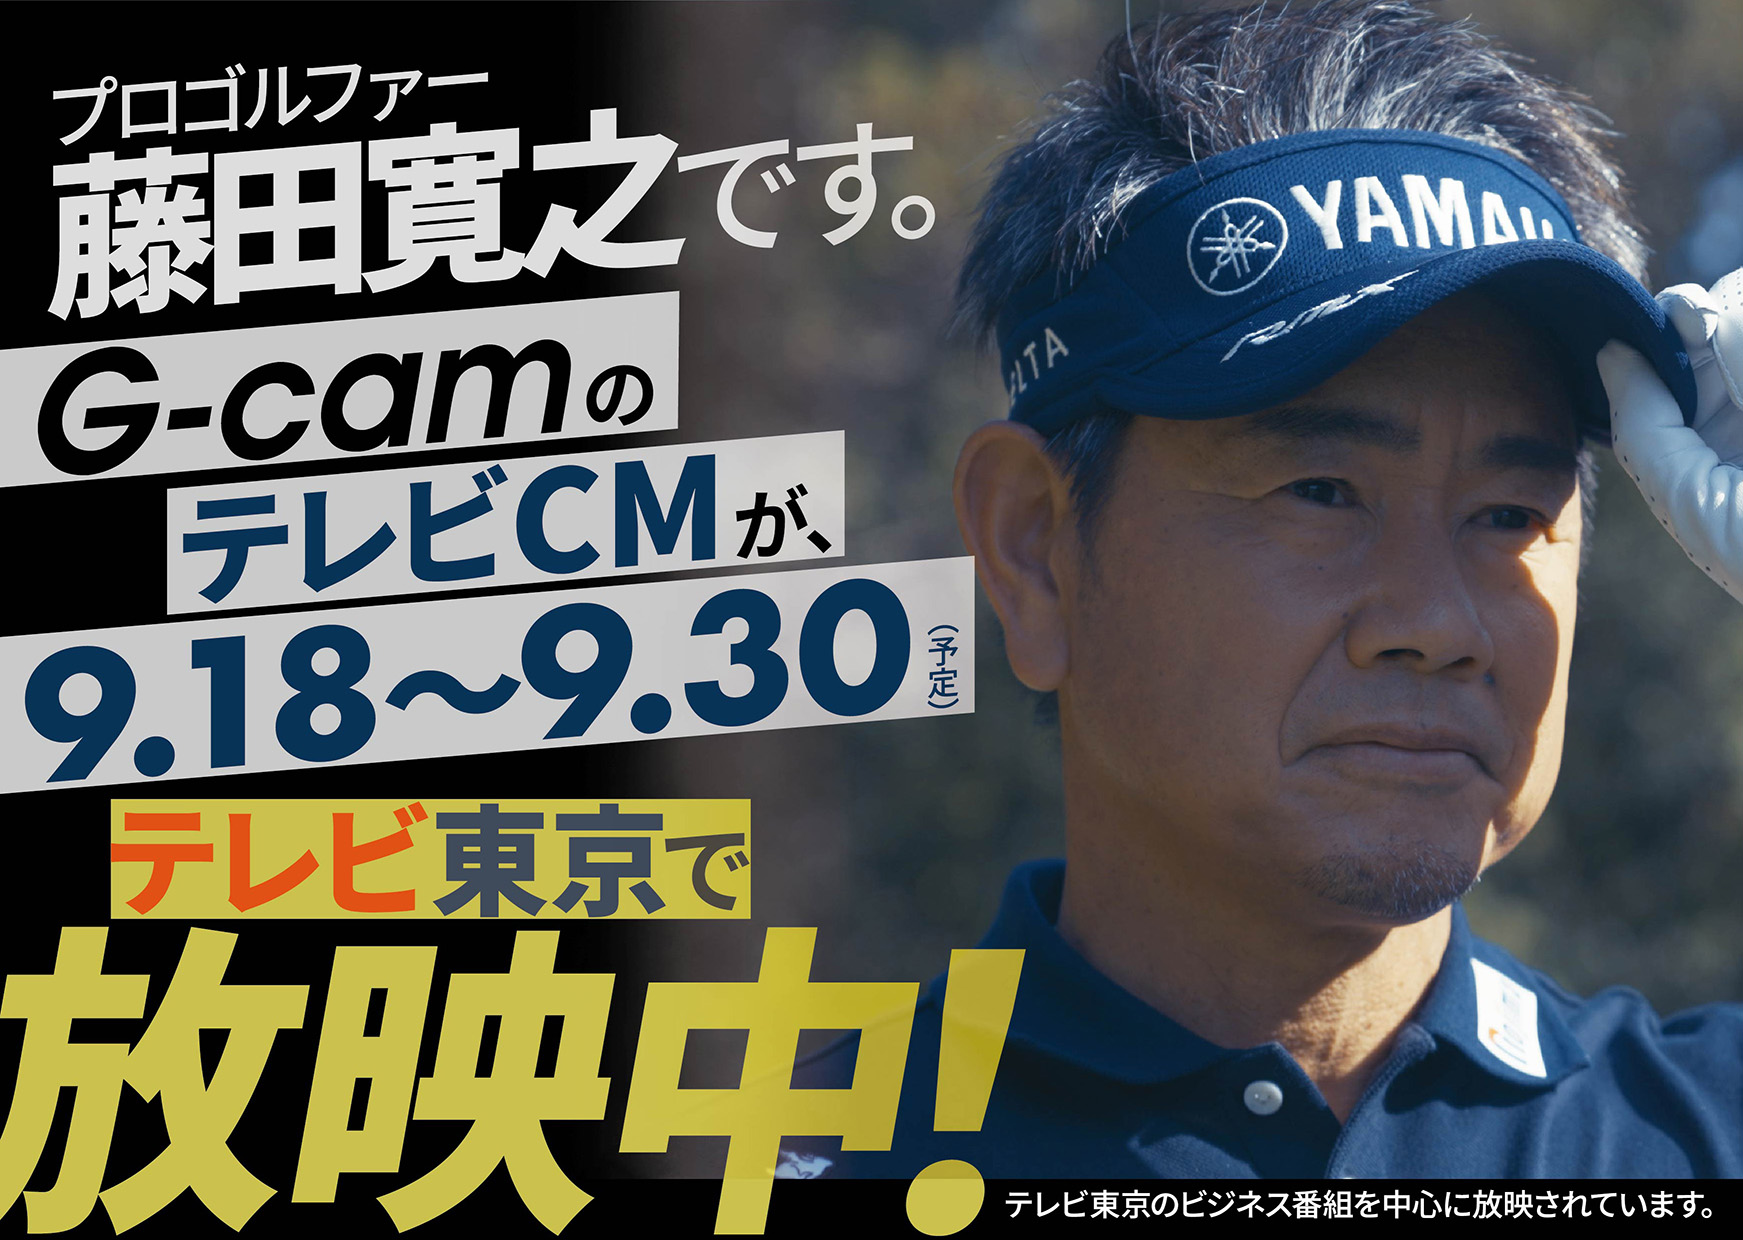 G-cam公式アンバサダー<br>
プロゴルファー 藤田寛之